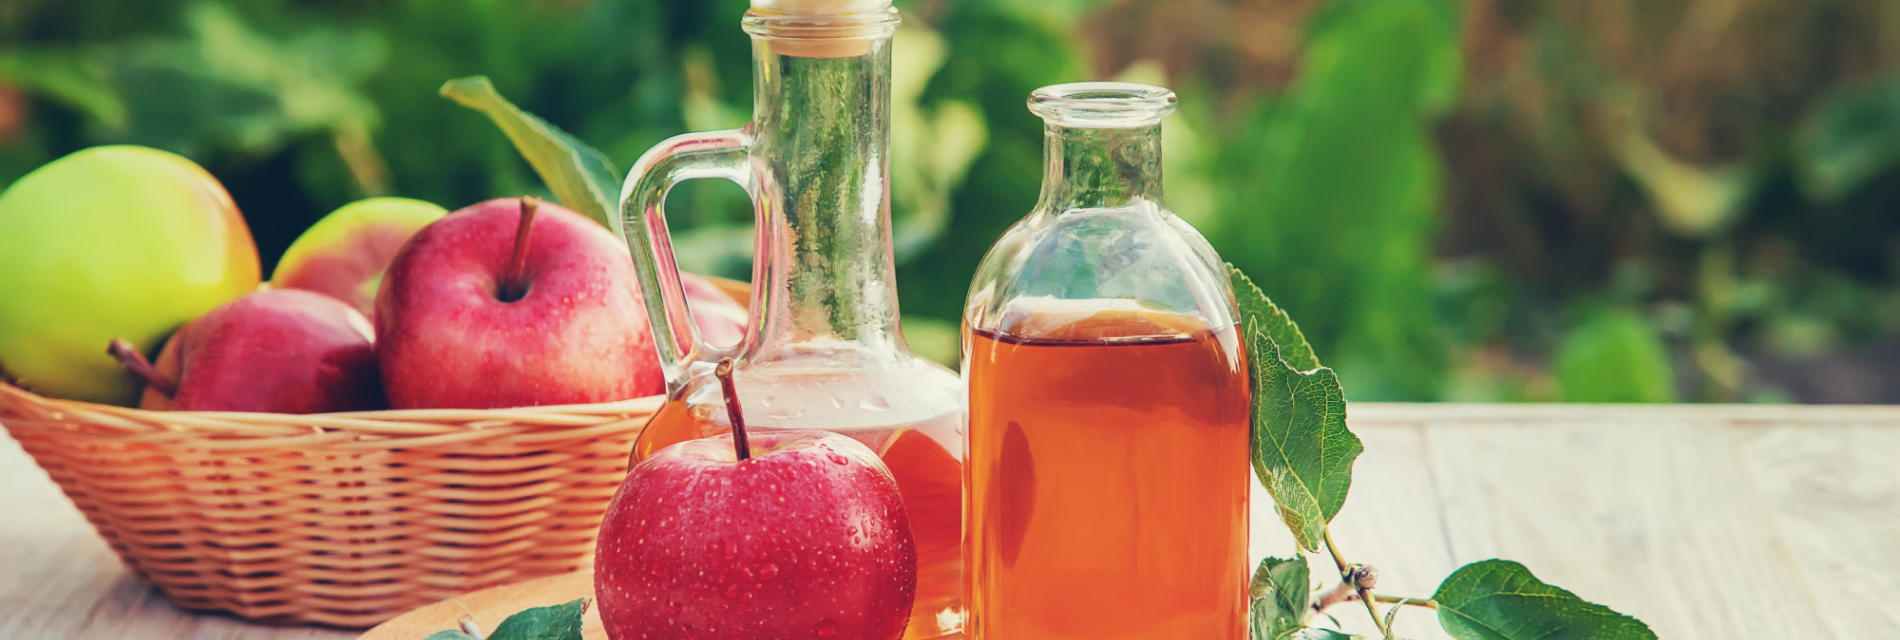 Is It Ok To Drink Apple Cider Vinegar?